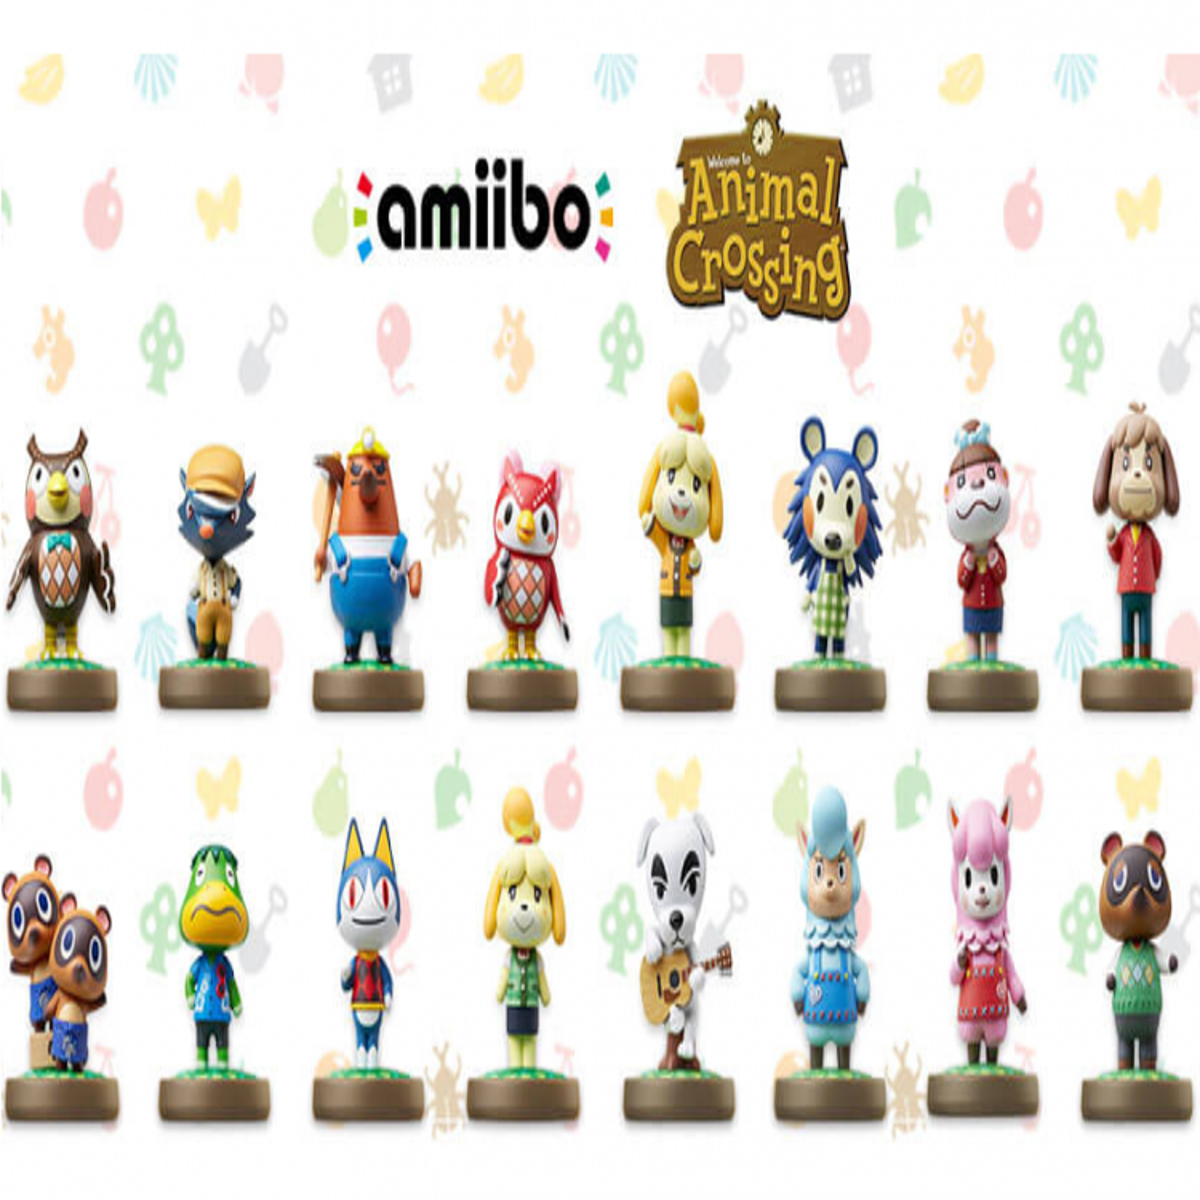 Animal Crossing Amiibo Restock Coming Soon!